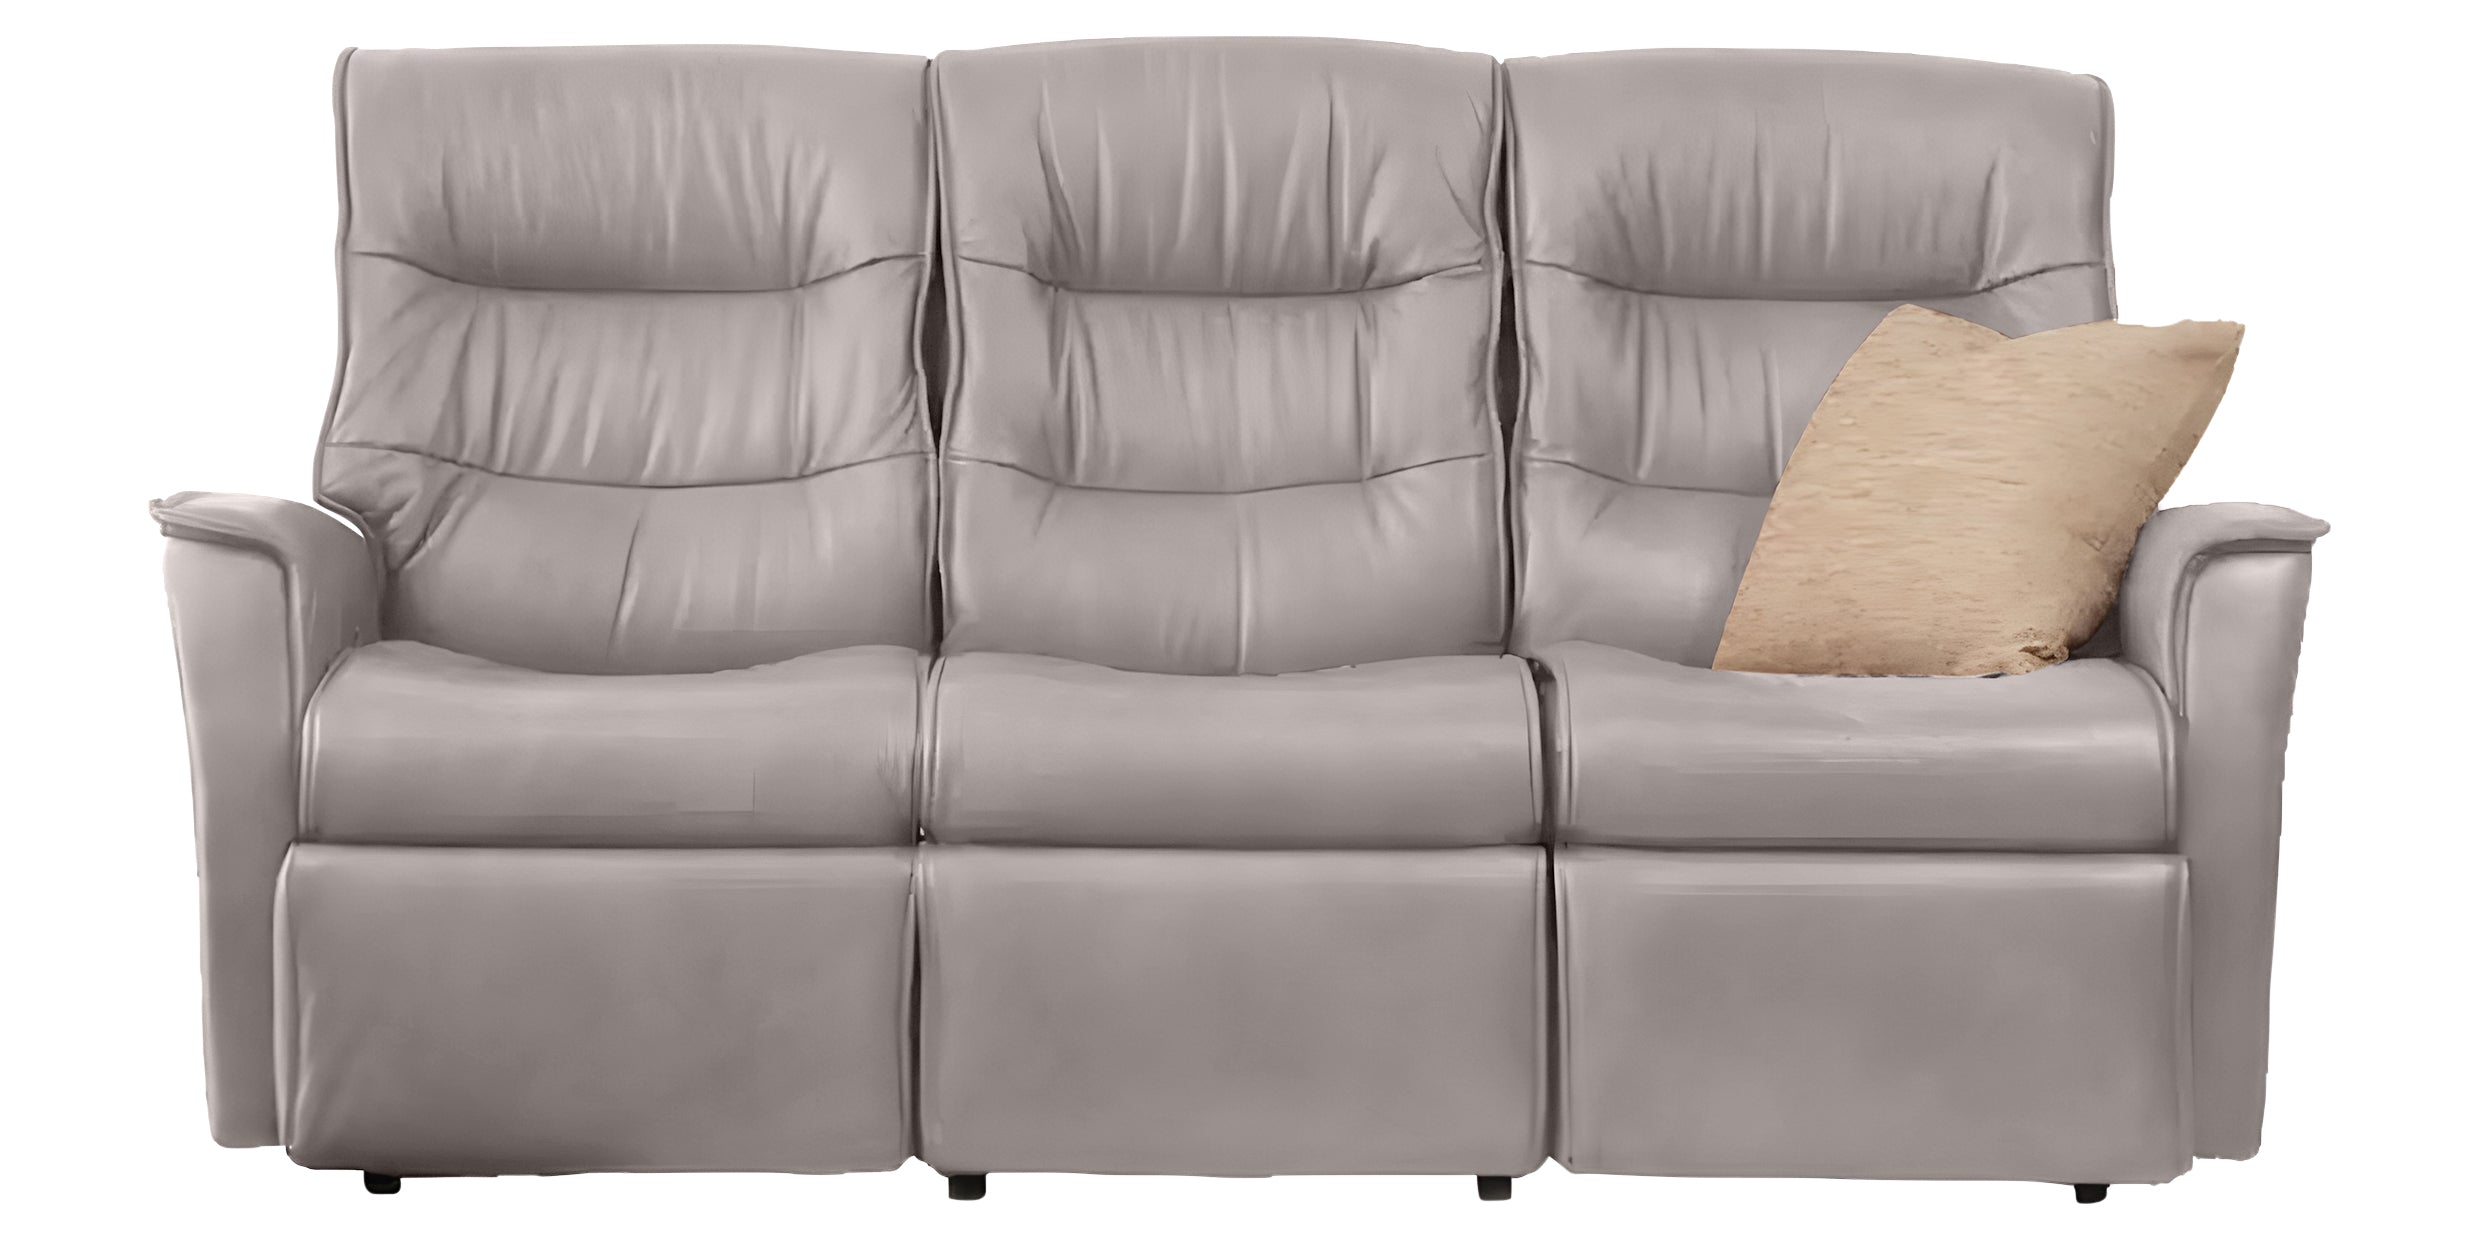 Trend Leather Cinder | Norwegian Comfort Paramount 3-Seater Wallsaver - Promo | Valley Ridge Furniture